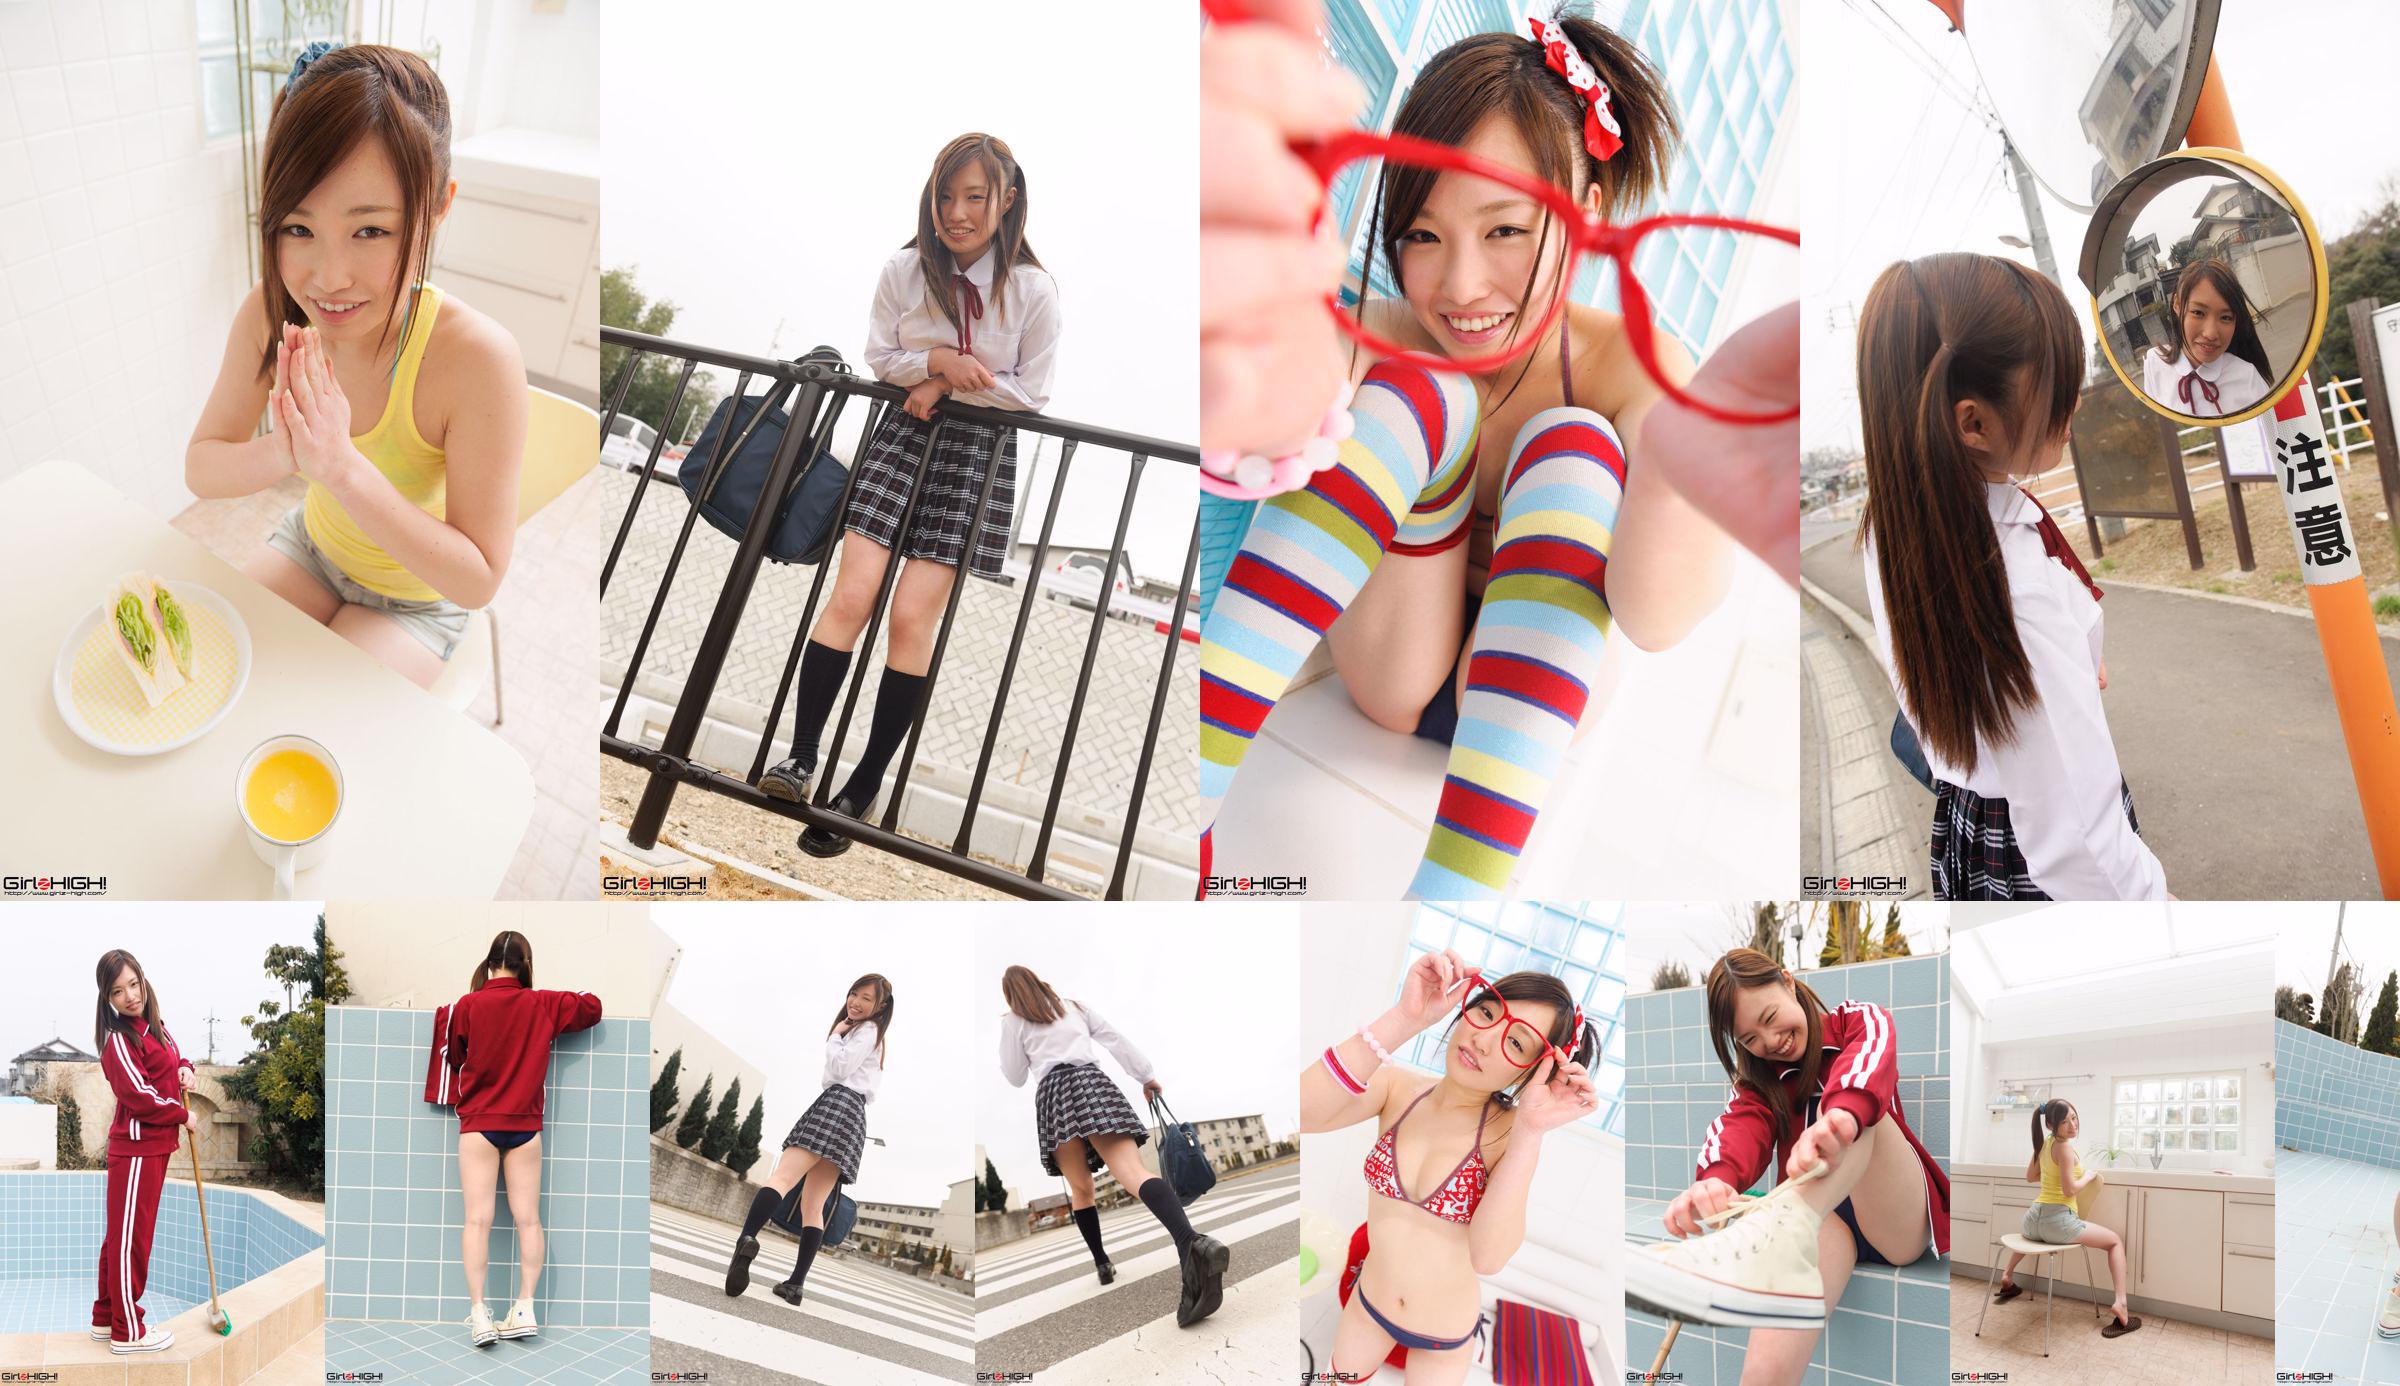 [Girlz-High] Yuno Natsuki Yuno Natsuki / Yuno Natsuki's Gravure Gallery --g023 Photoset 02 No.b6d76b Page 4